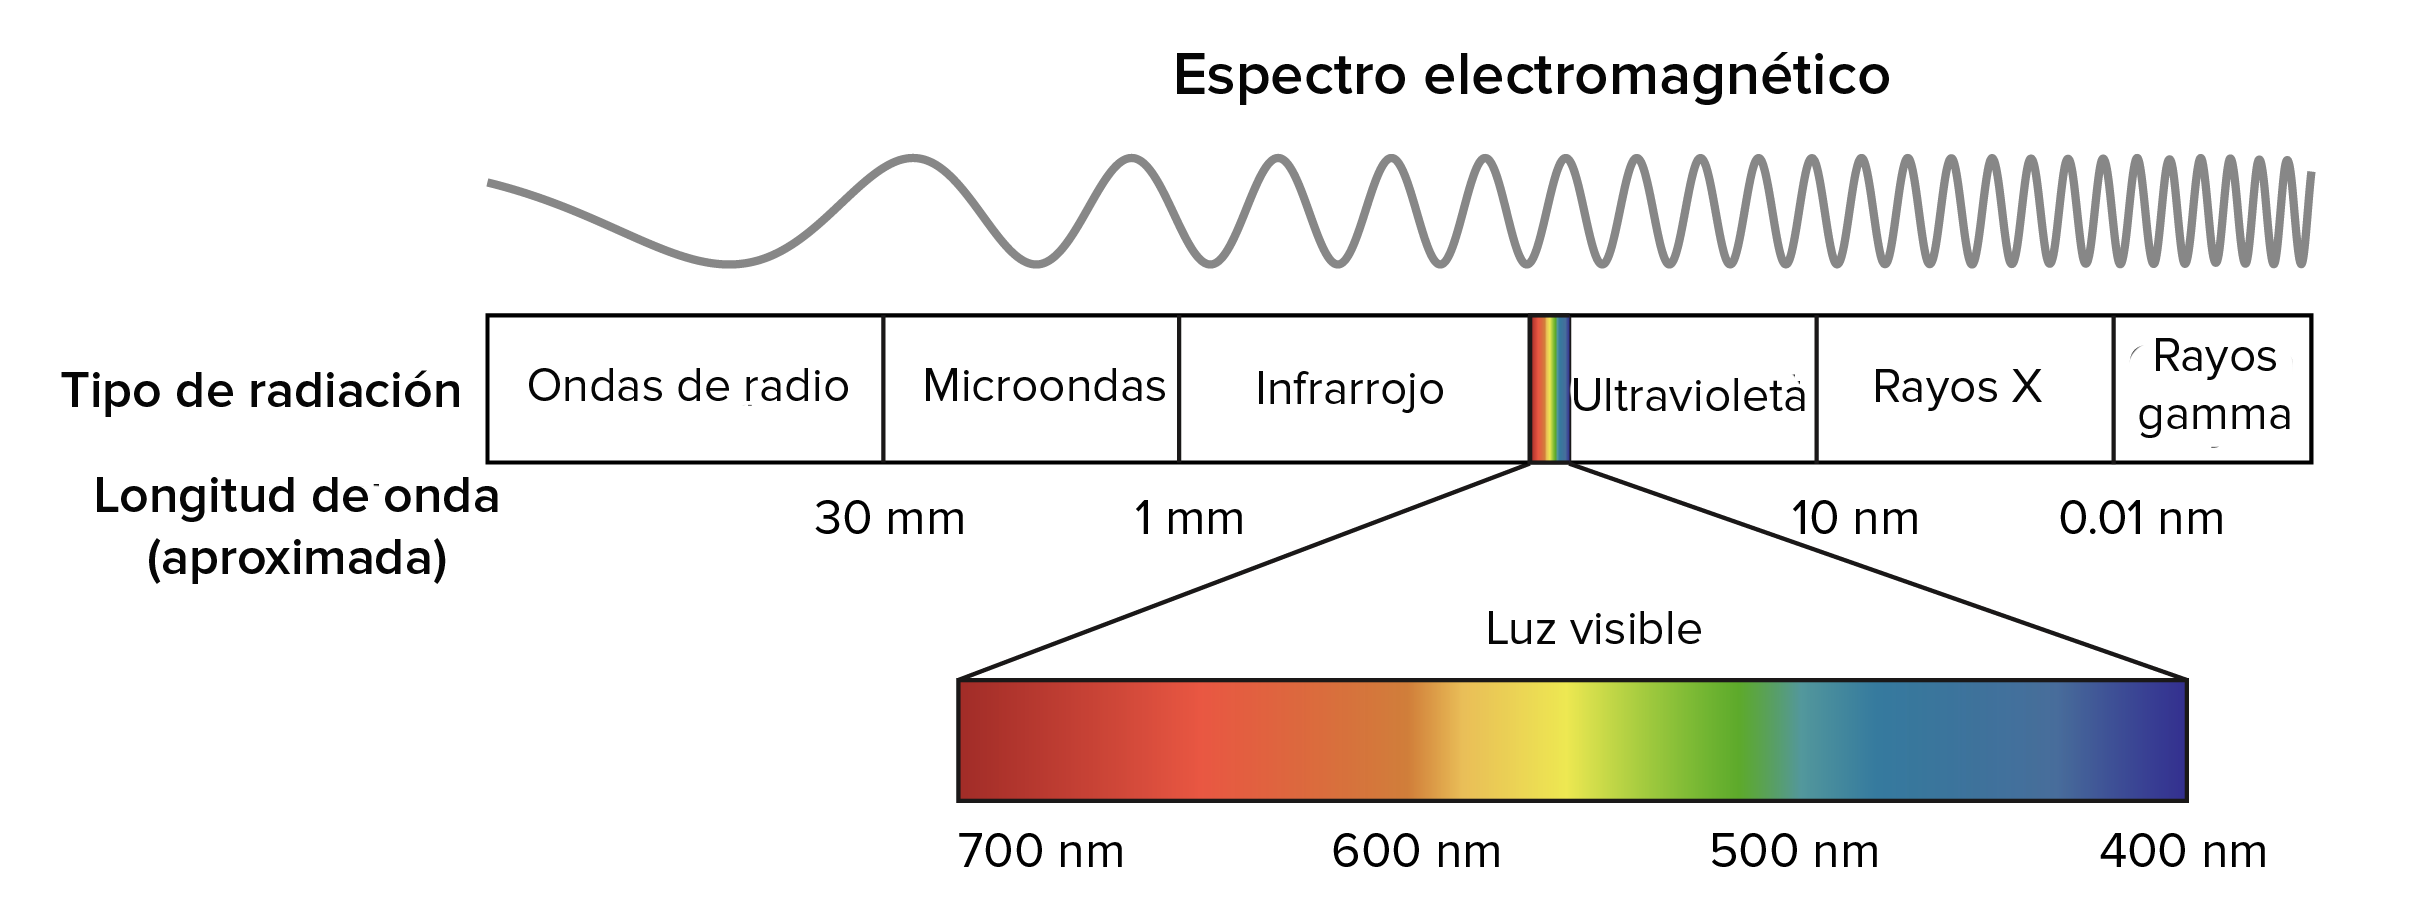 Espectro luz - Light spectrum